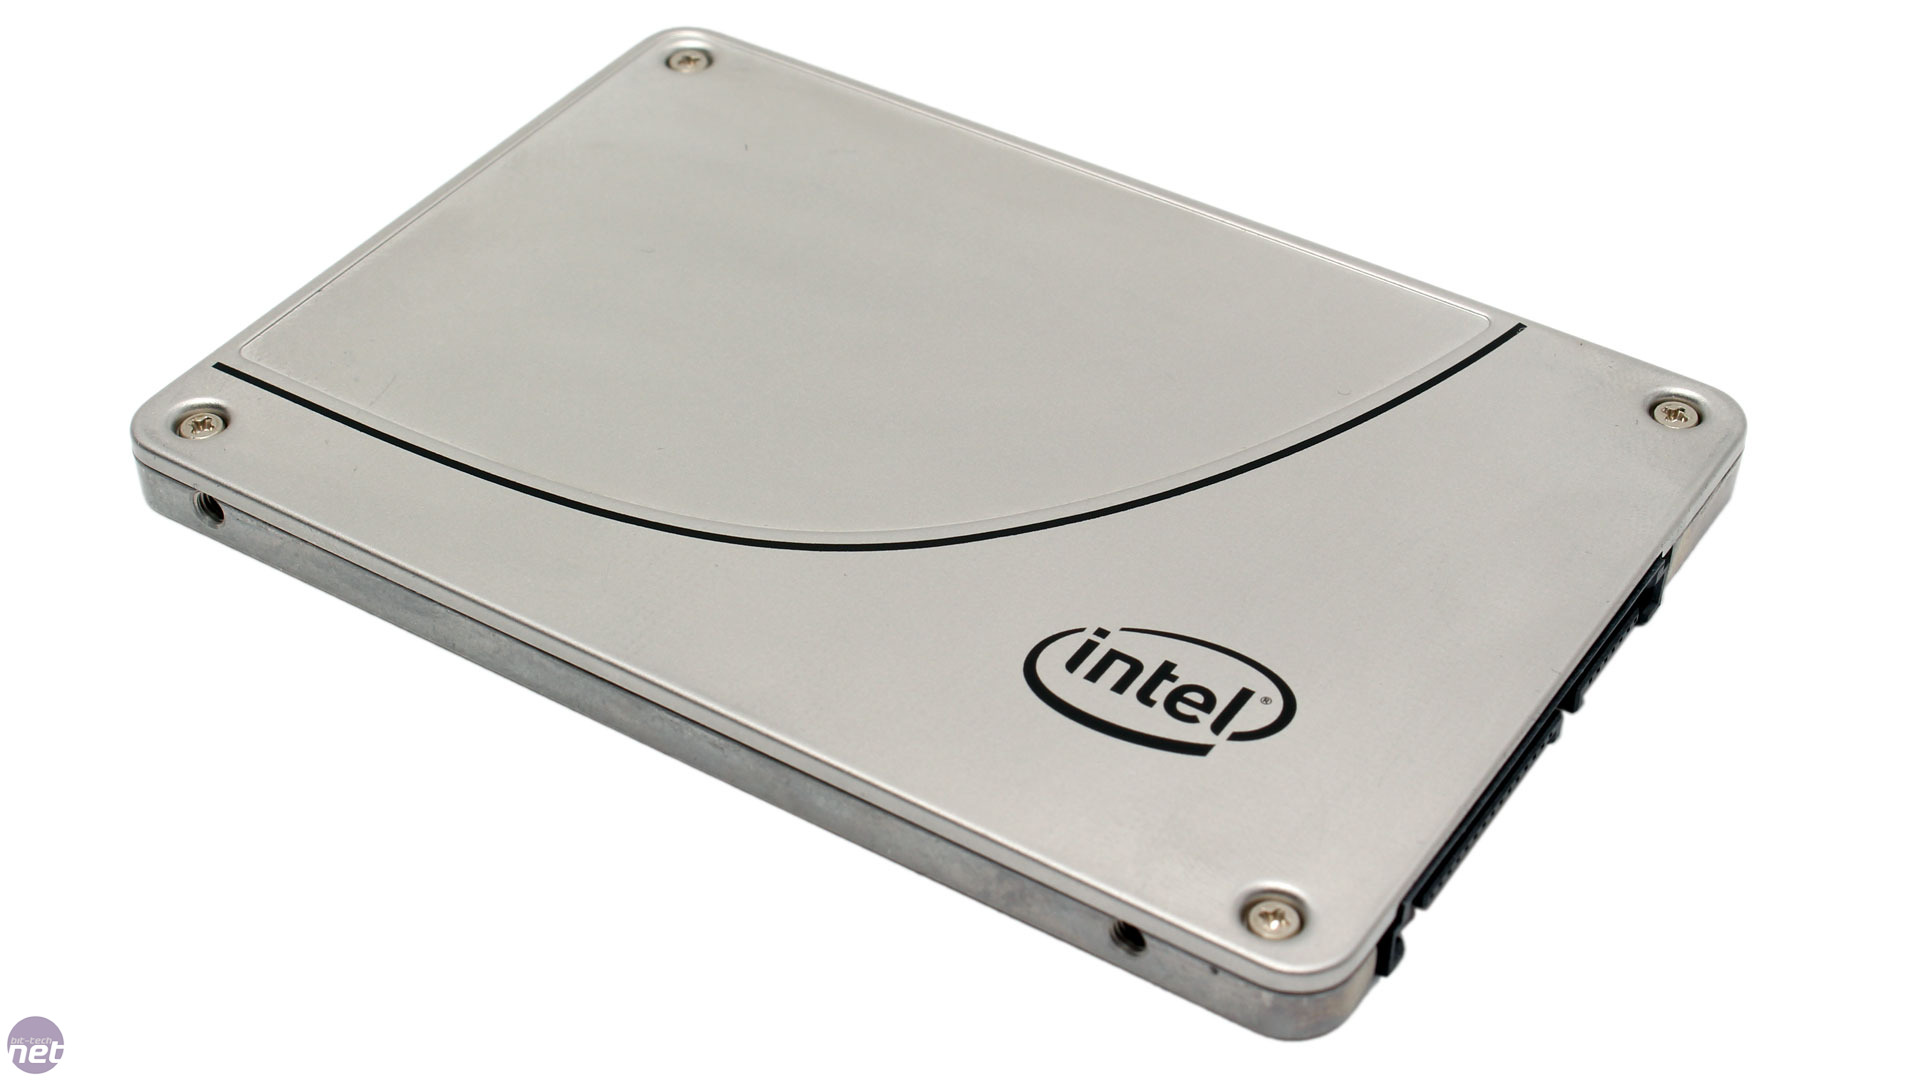 Association periskop fumle Intel SSD 730 240GB Review | bit-tech.net